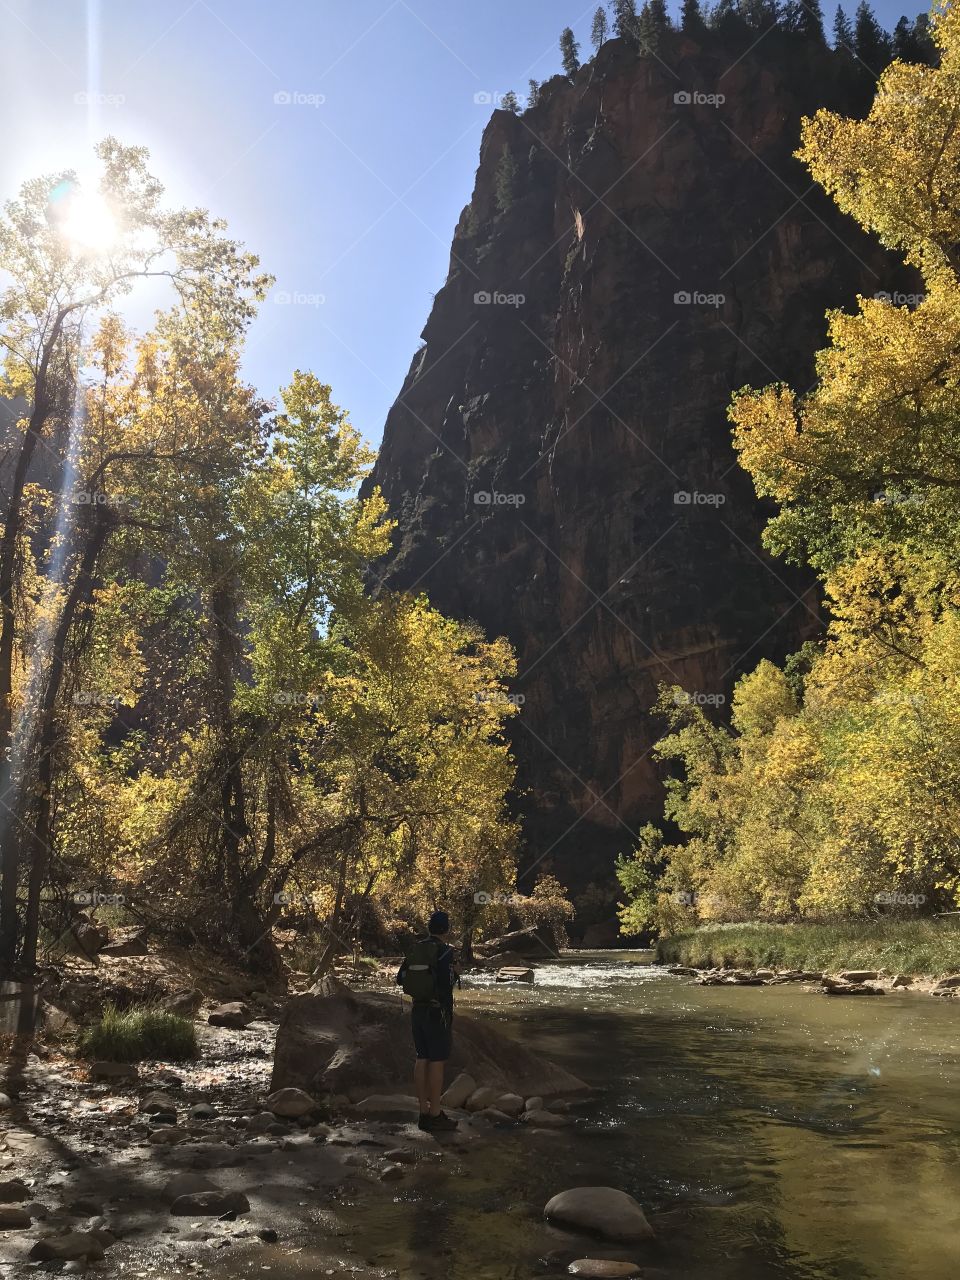 Zion, Utah
Fall, 2017